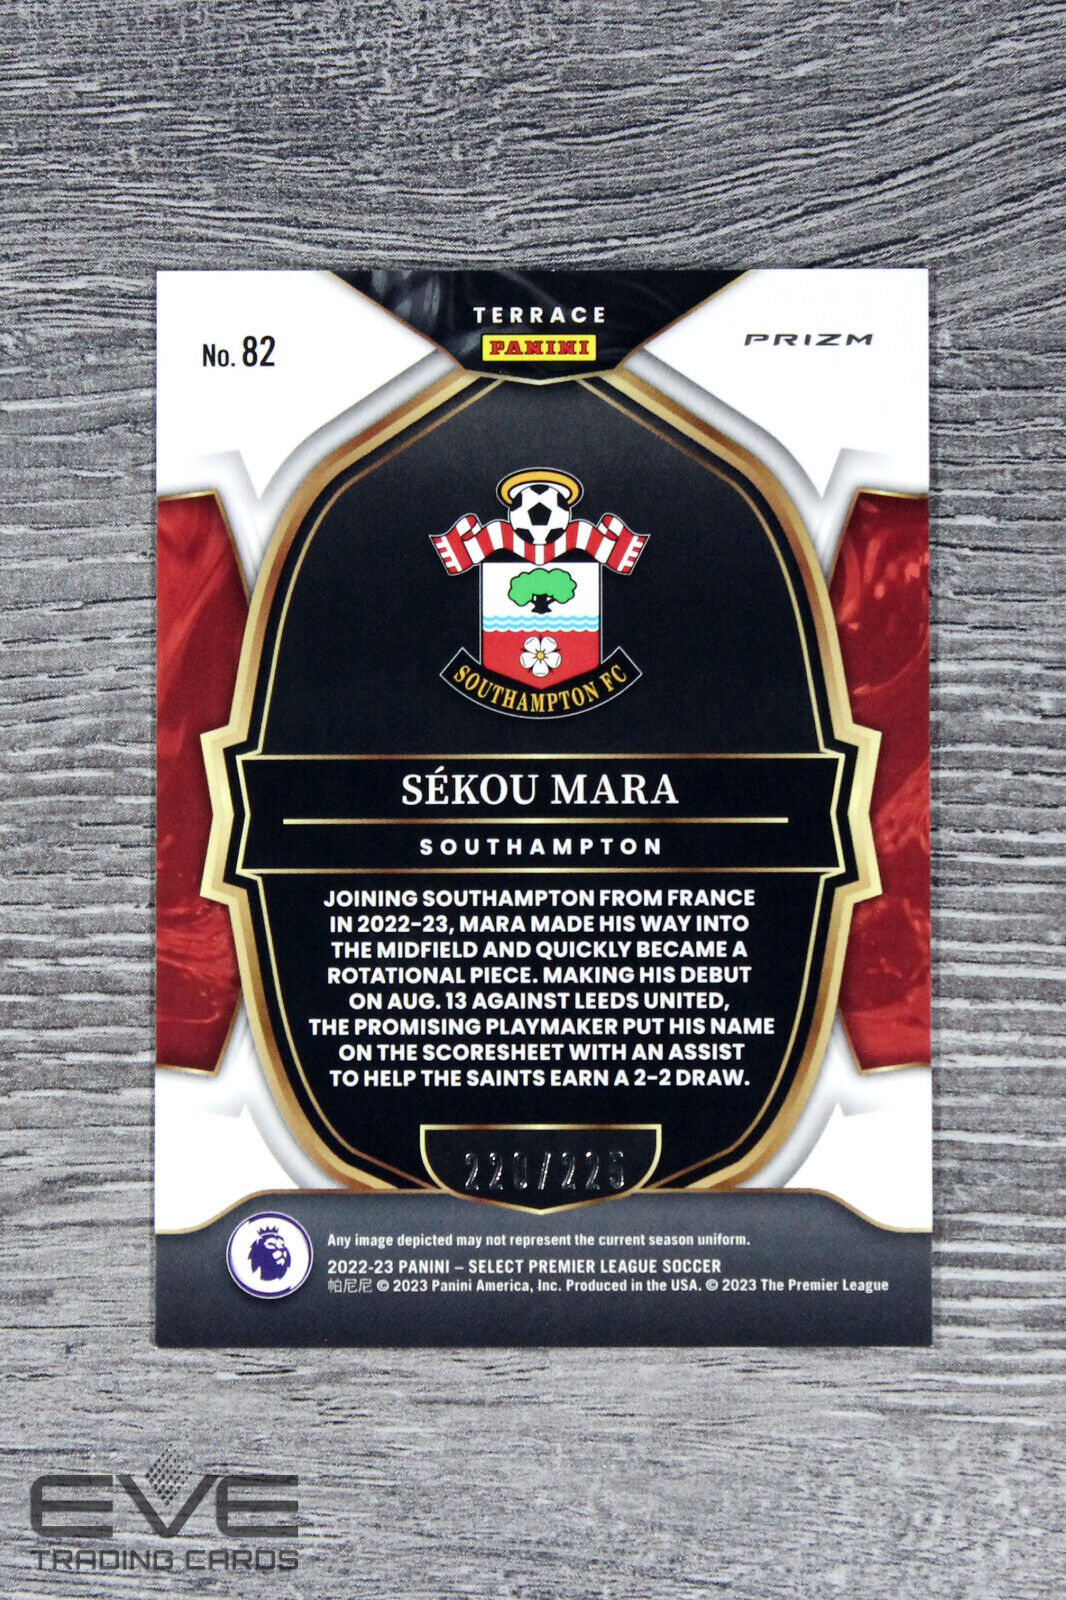 2022-23 Panini Select EPL Soccer Card 82 Sekou Mara Terrace Camo Prizm /225 NM/M